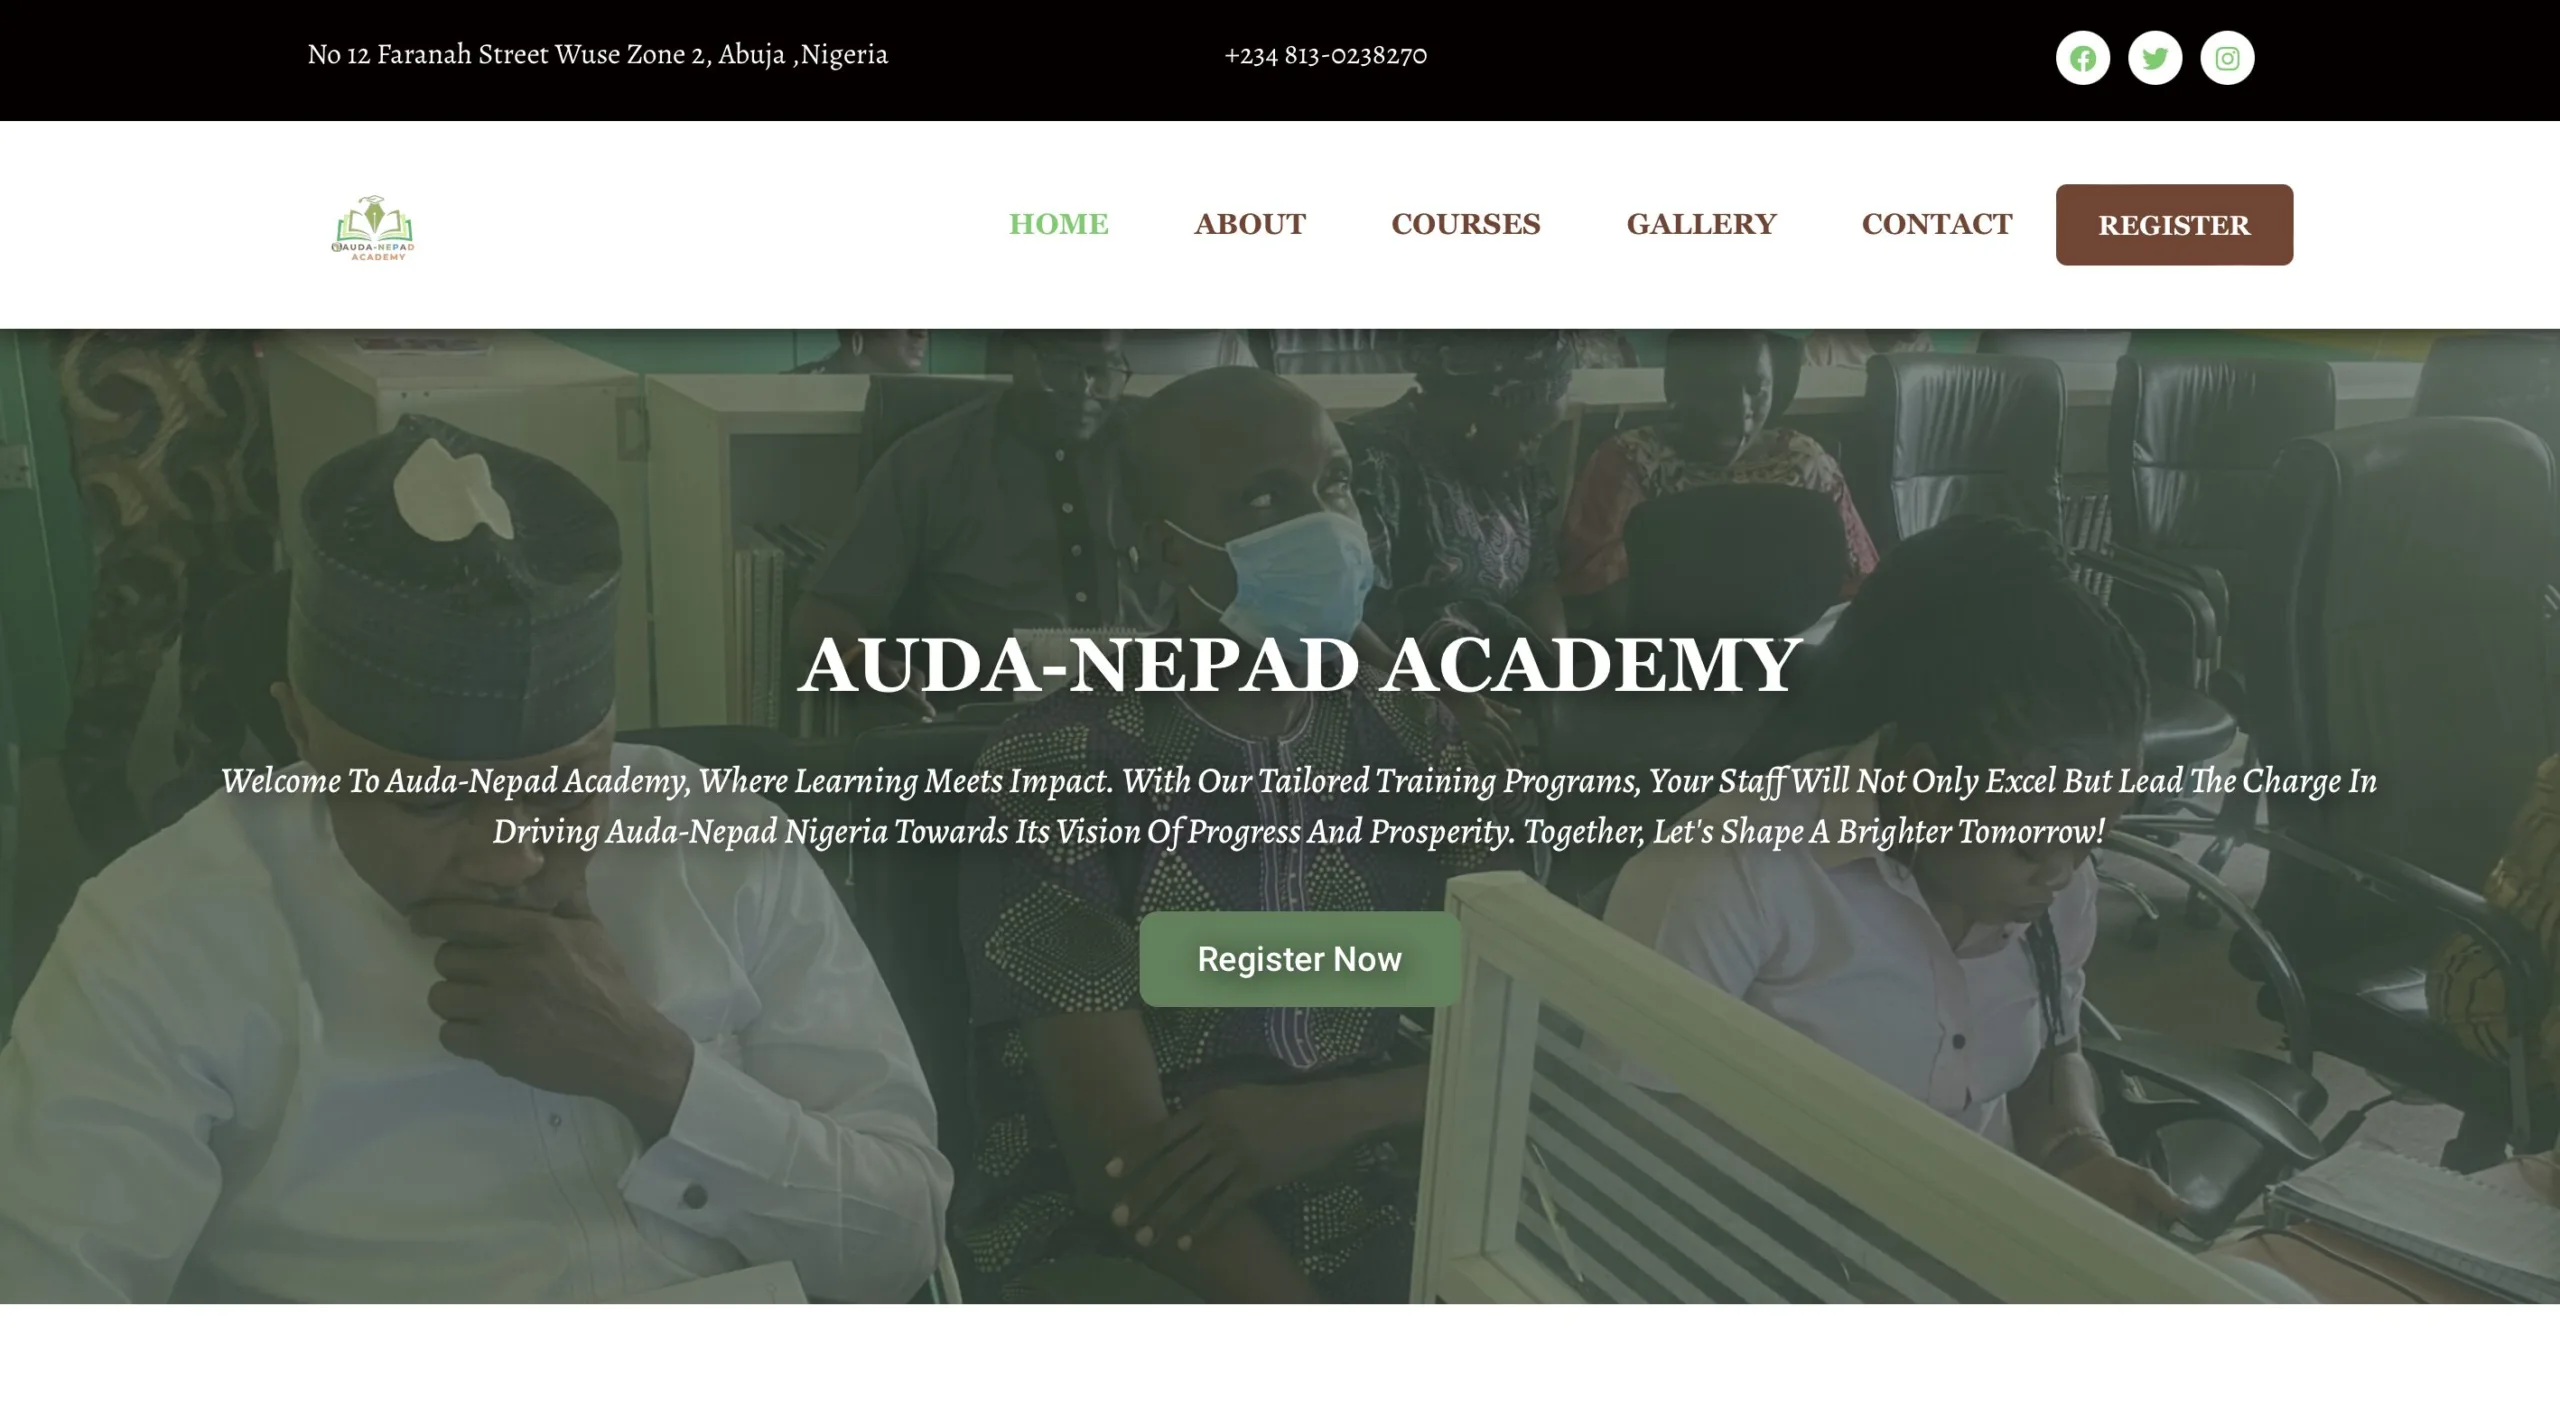 AUDA-NEPAD ACADEMY WEBSITE_Stoic-B Technologies LTD